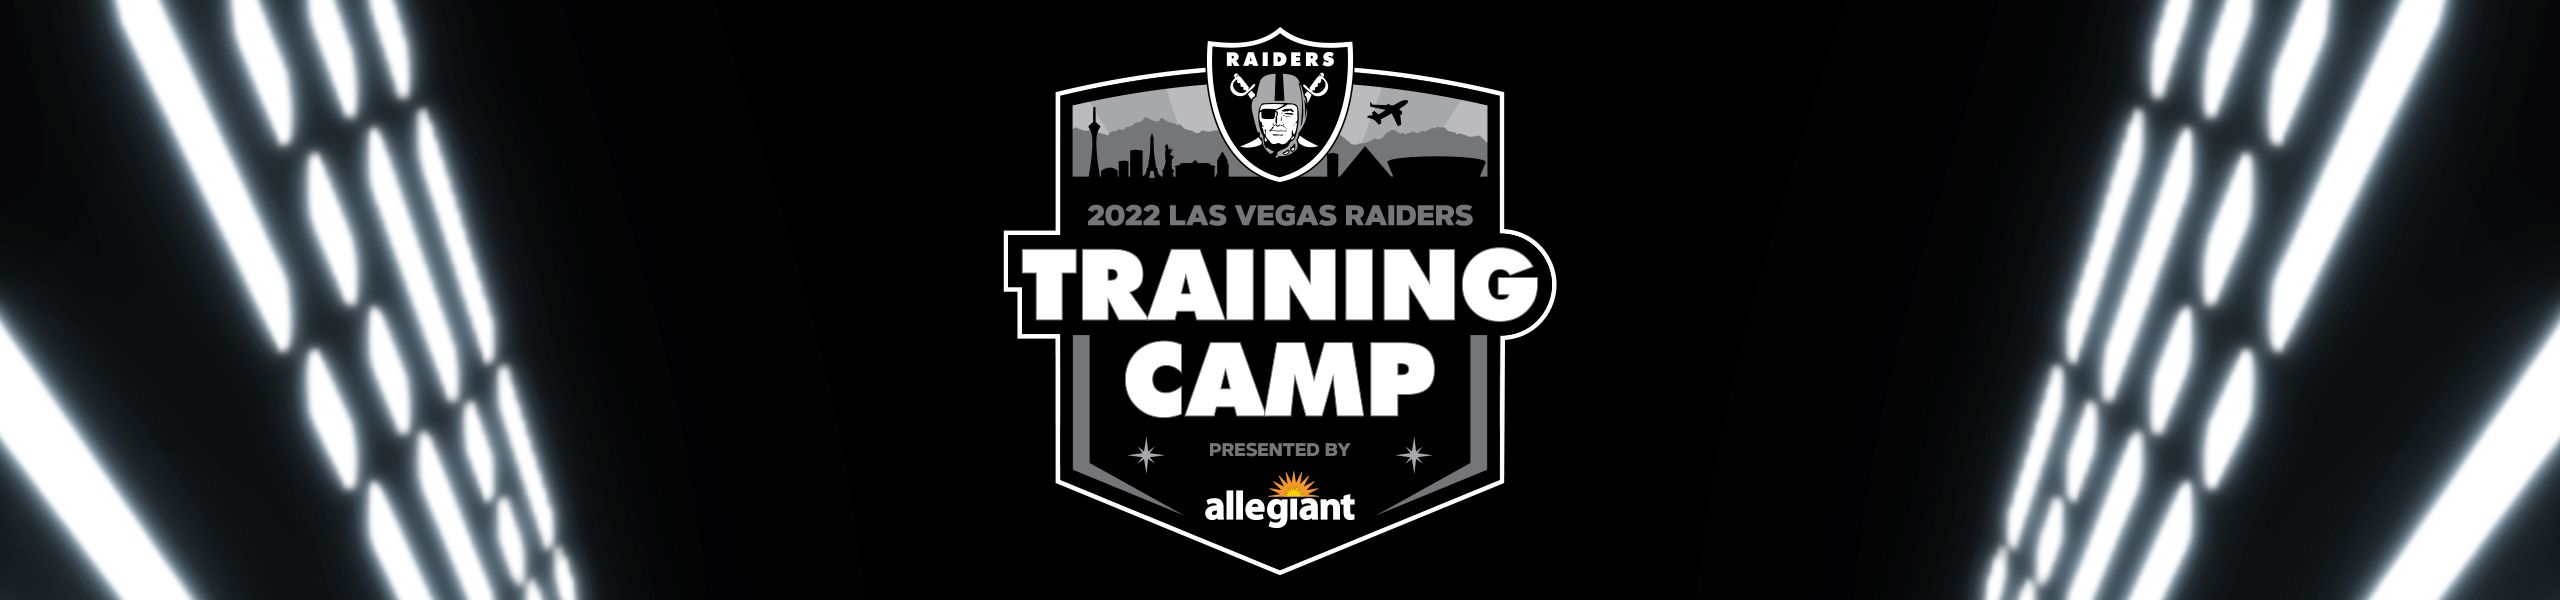 Training Camp Vegas Raiders | Raiders.com